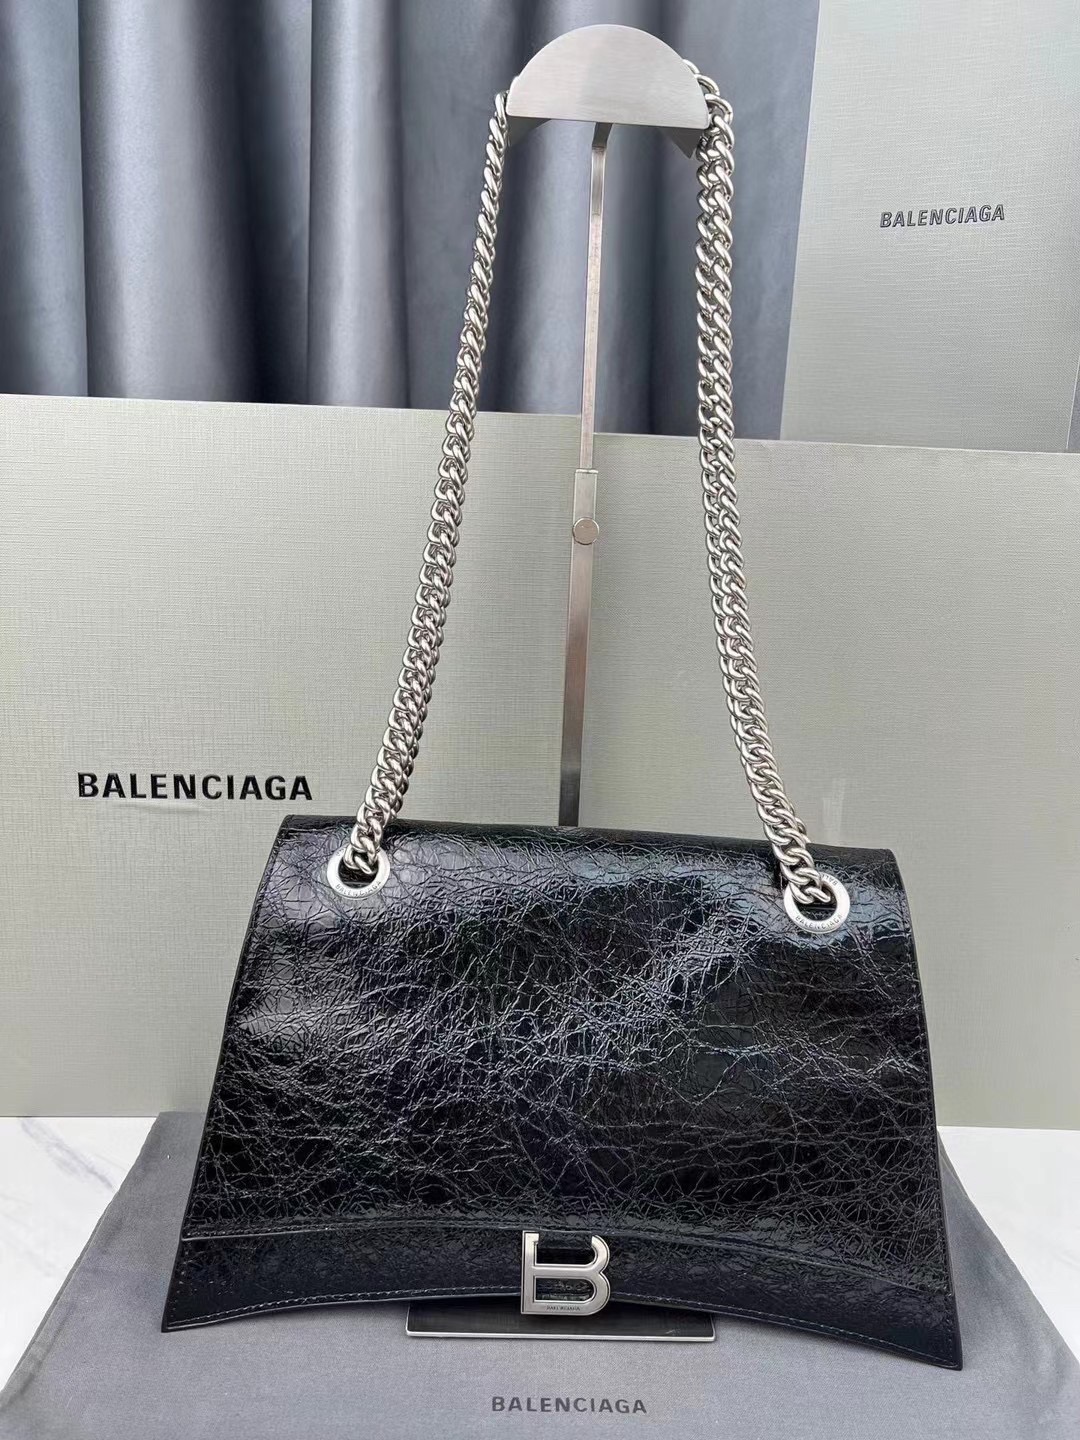 Balenciaga hourglass chain bag